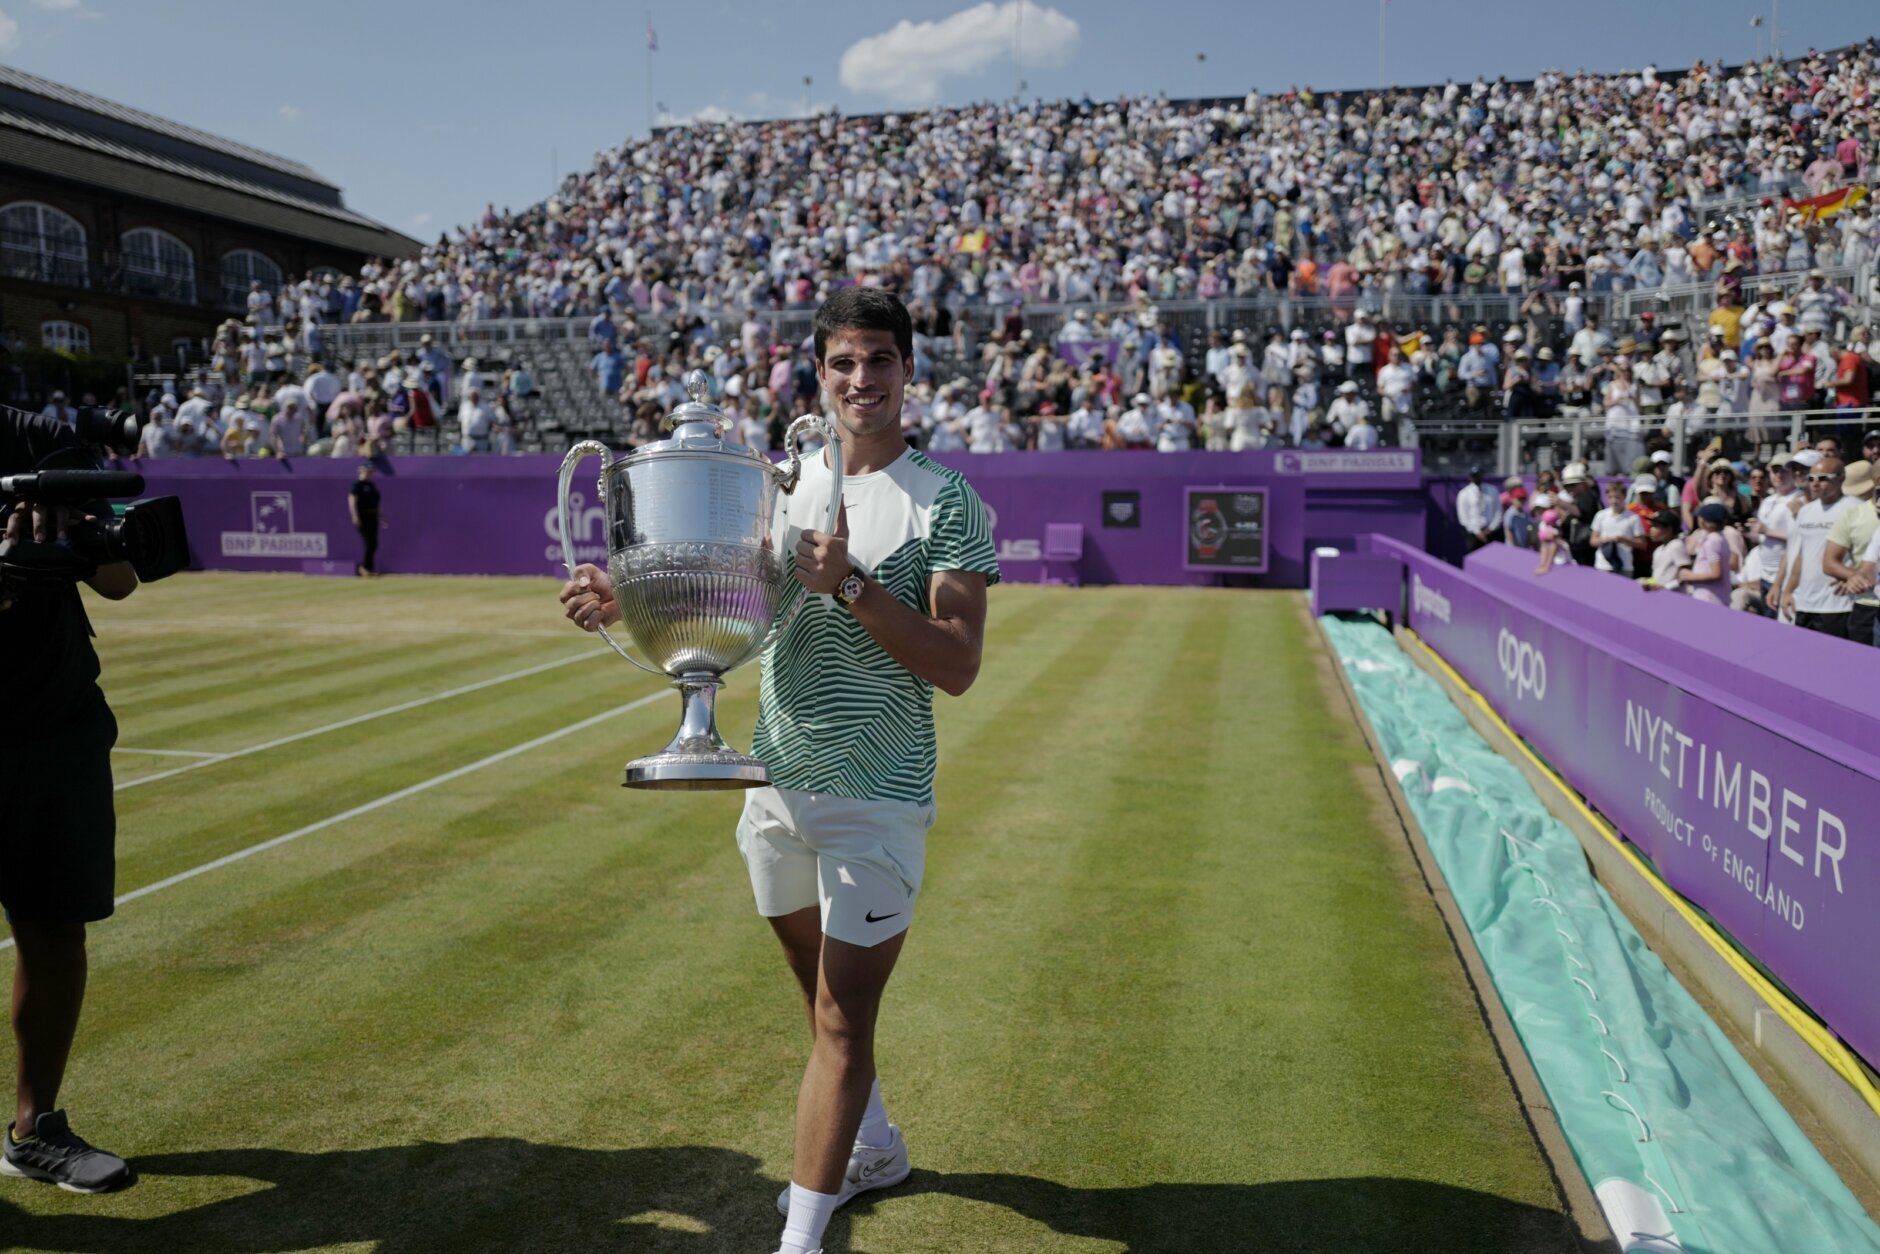 Wimbledon 2023: Order of Play with Carlos Alcaraz taking on Novak Djokovic, Tennis News